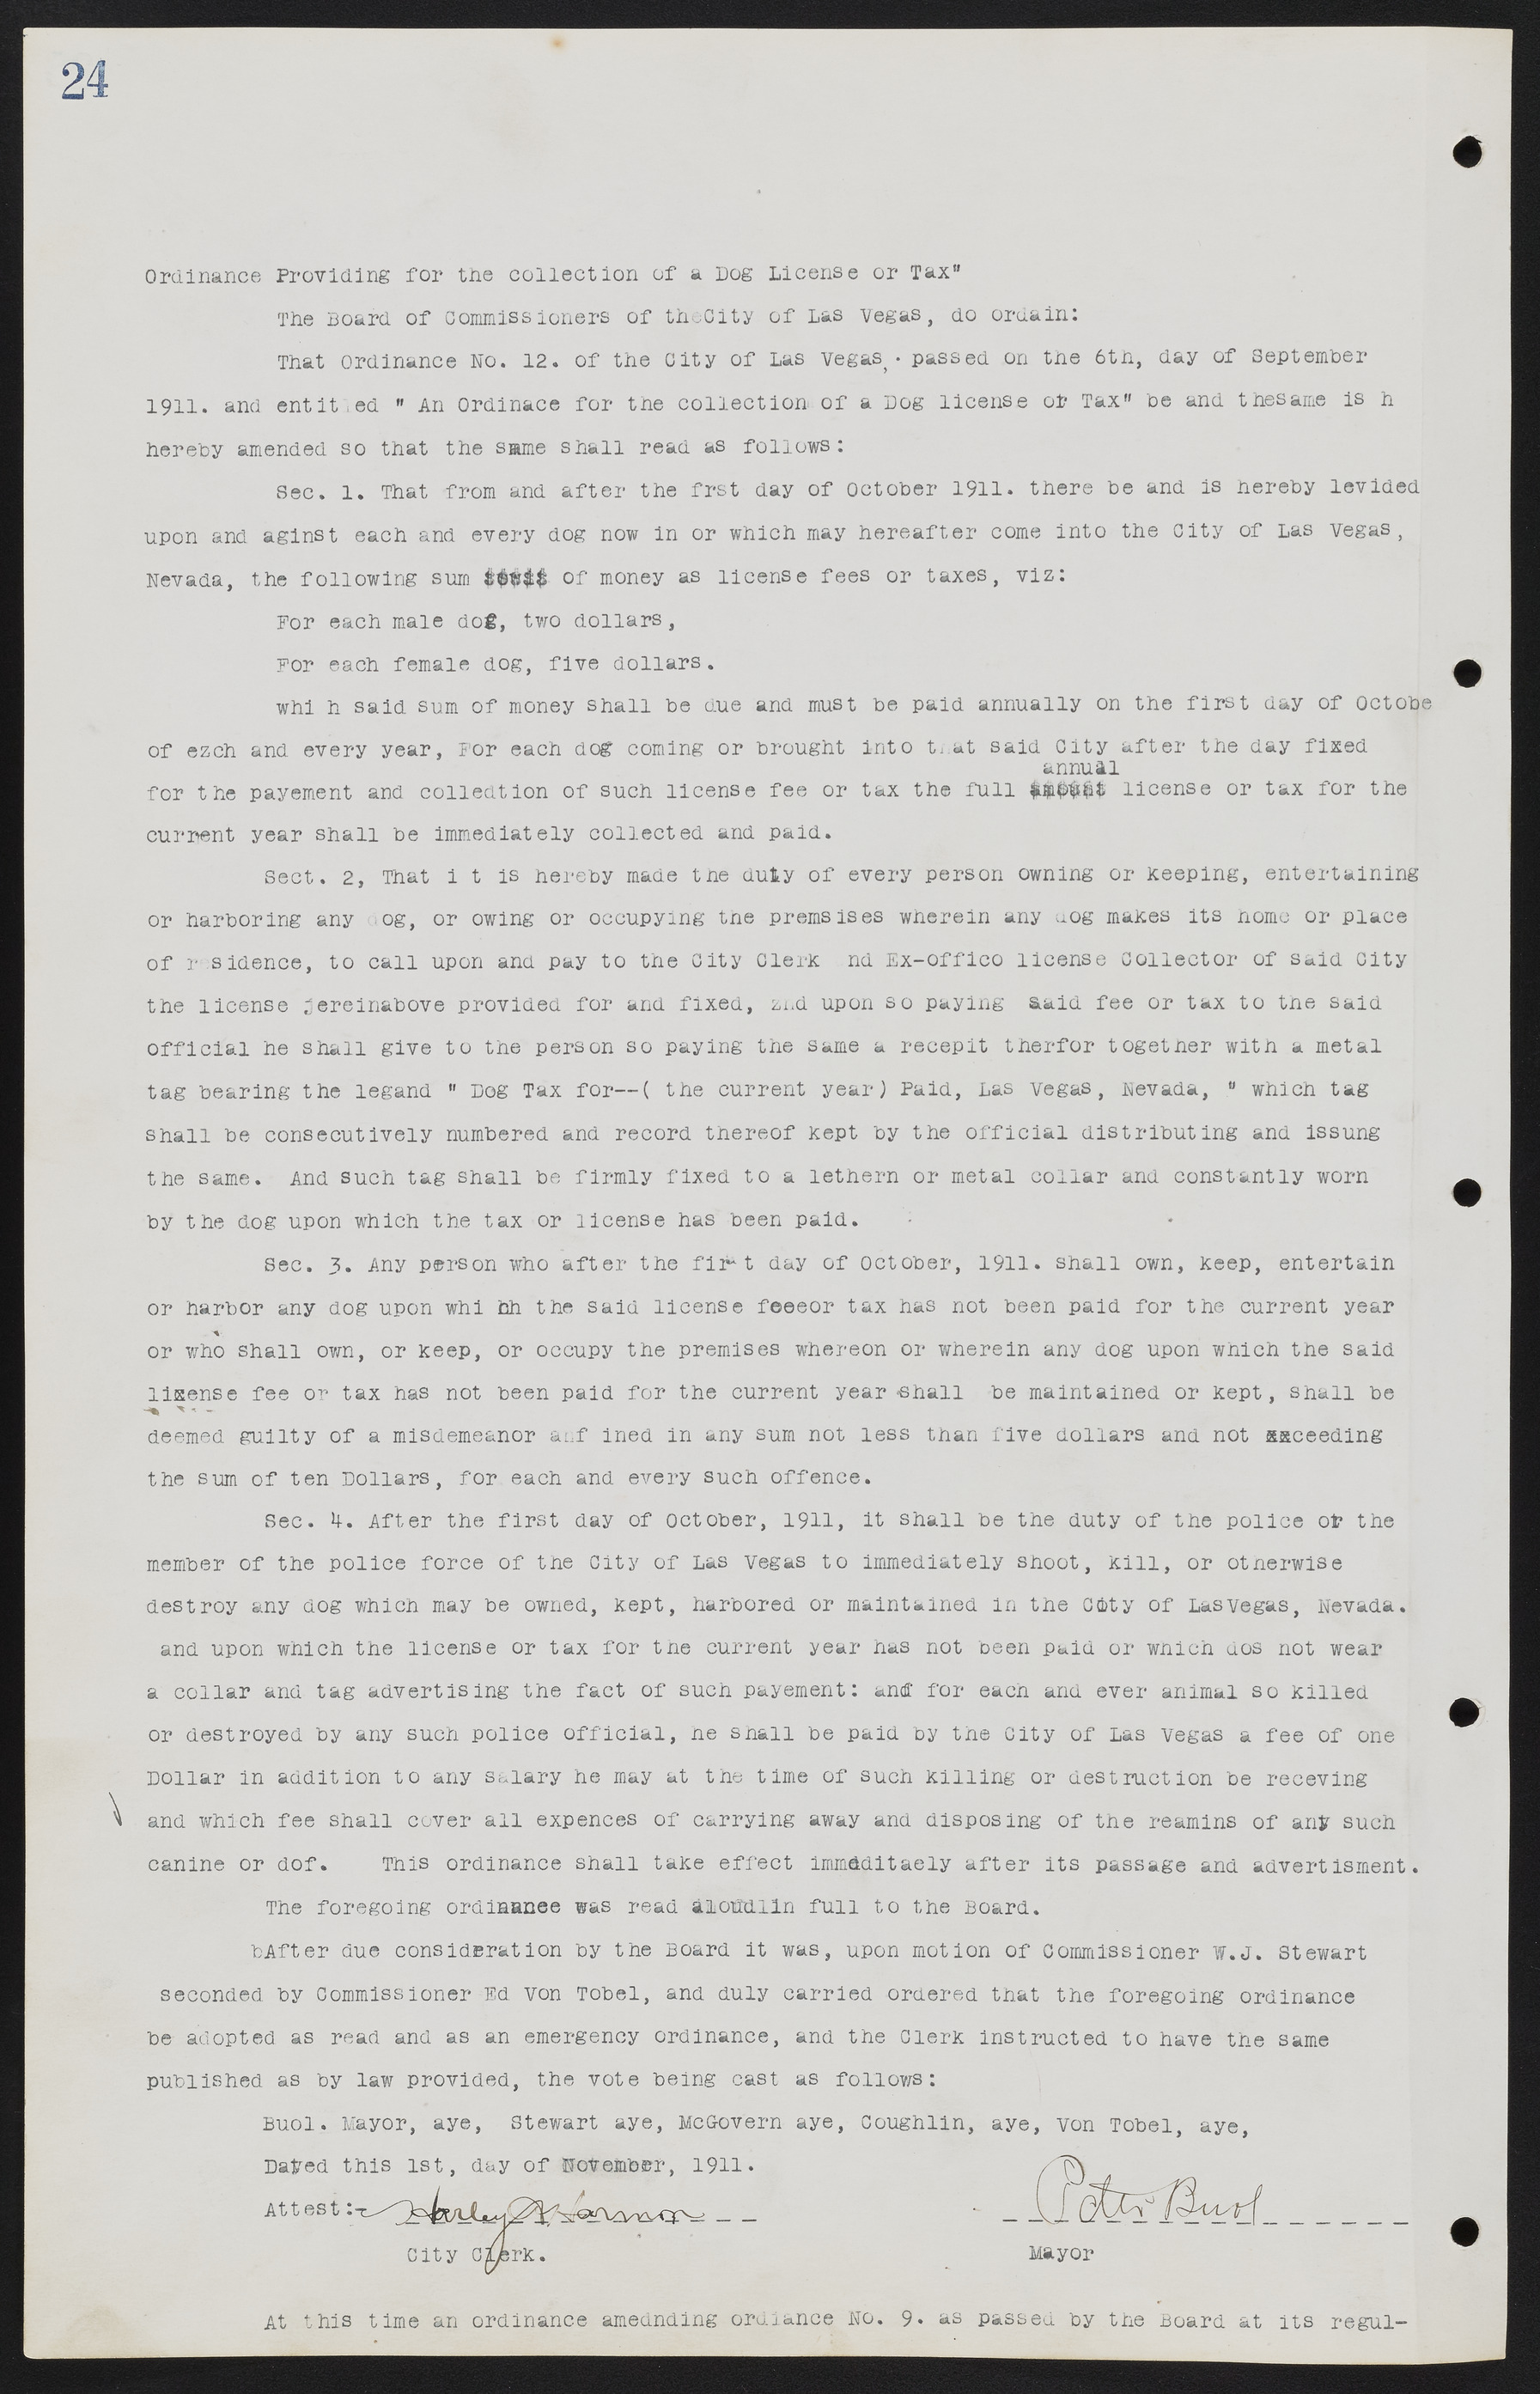 Las Vegas City Commission Minutes, June 22, 1911 to February 7, 1922, lvc000001-38